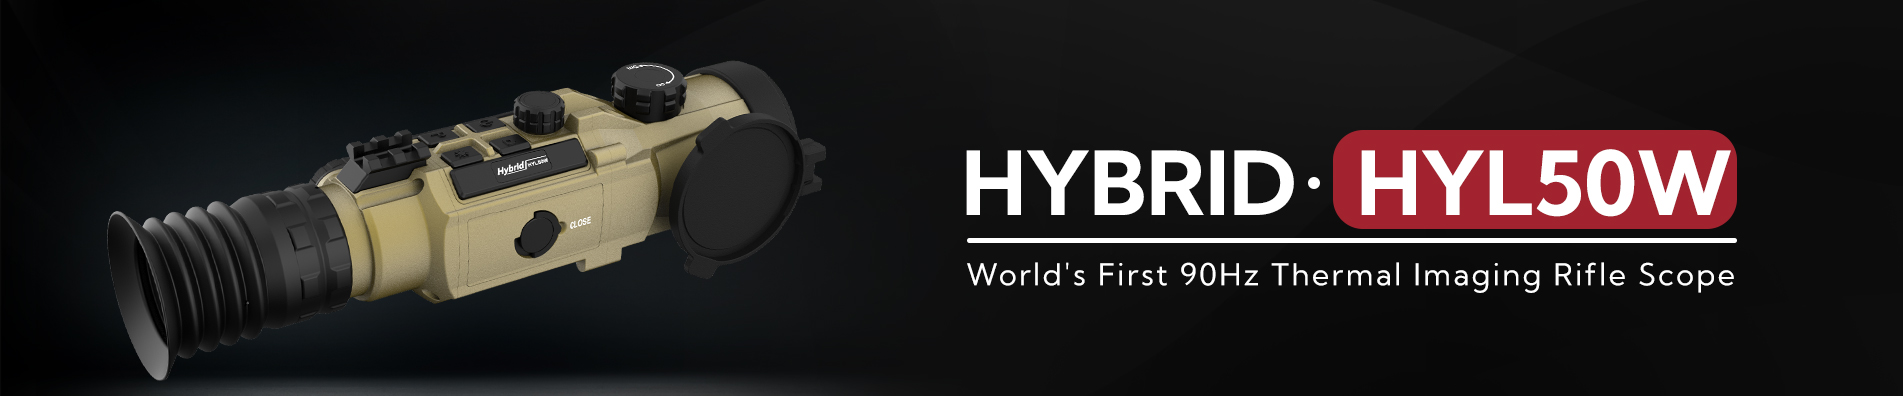 Thermal Imaging Rifle Scope Hybrid Series- HYL50W